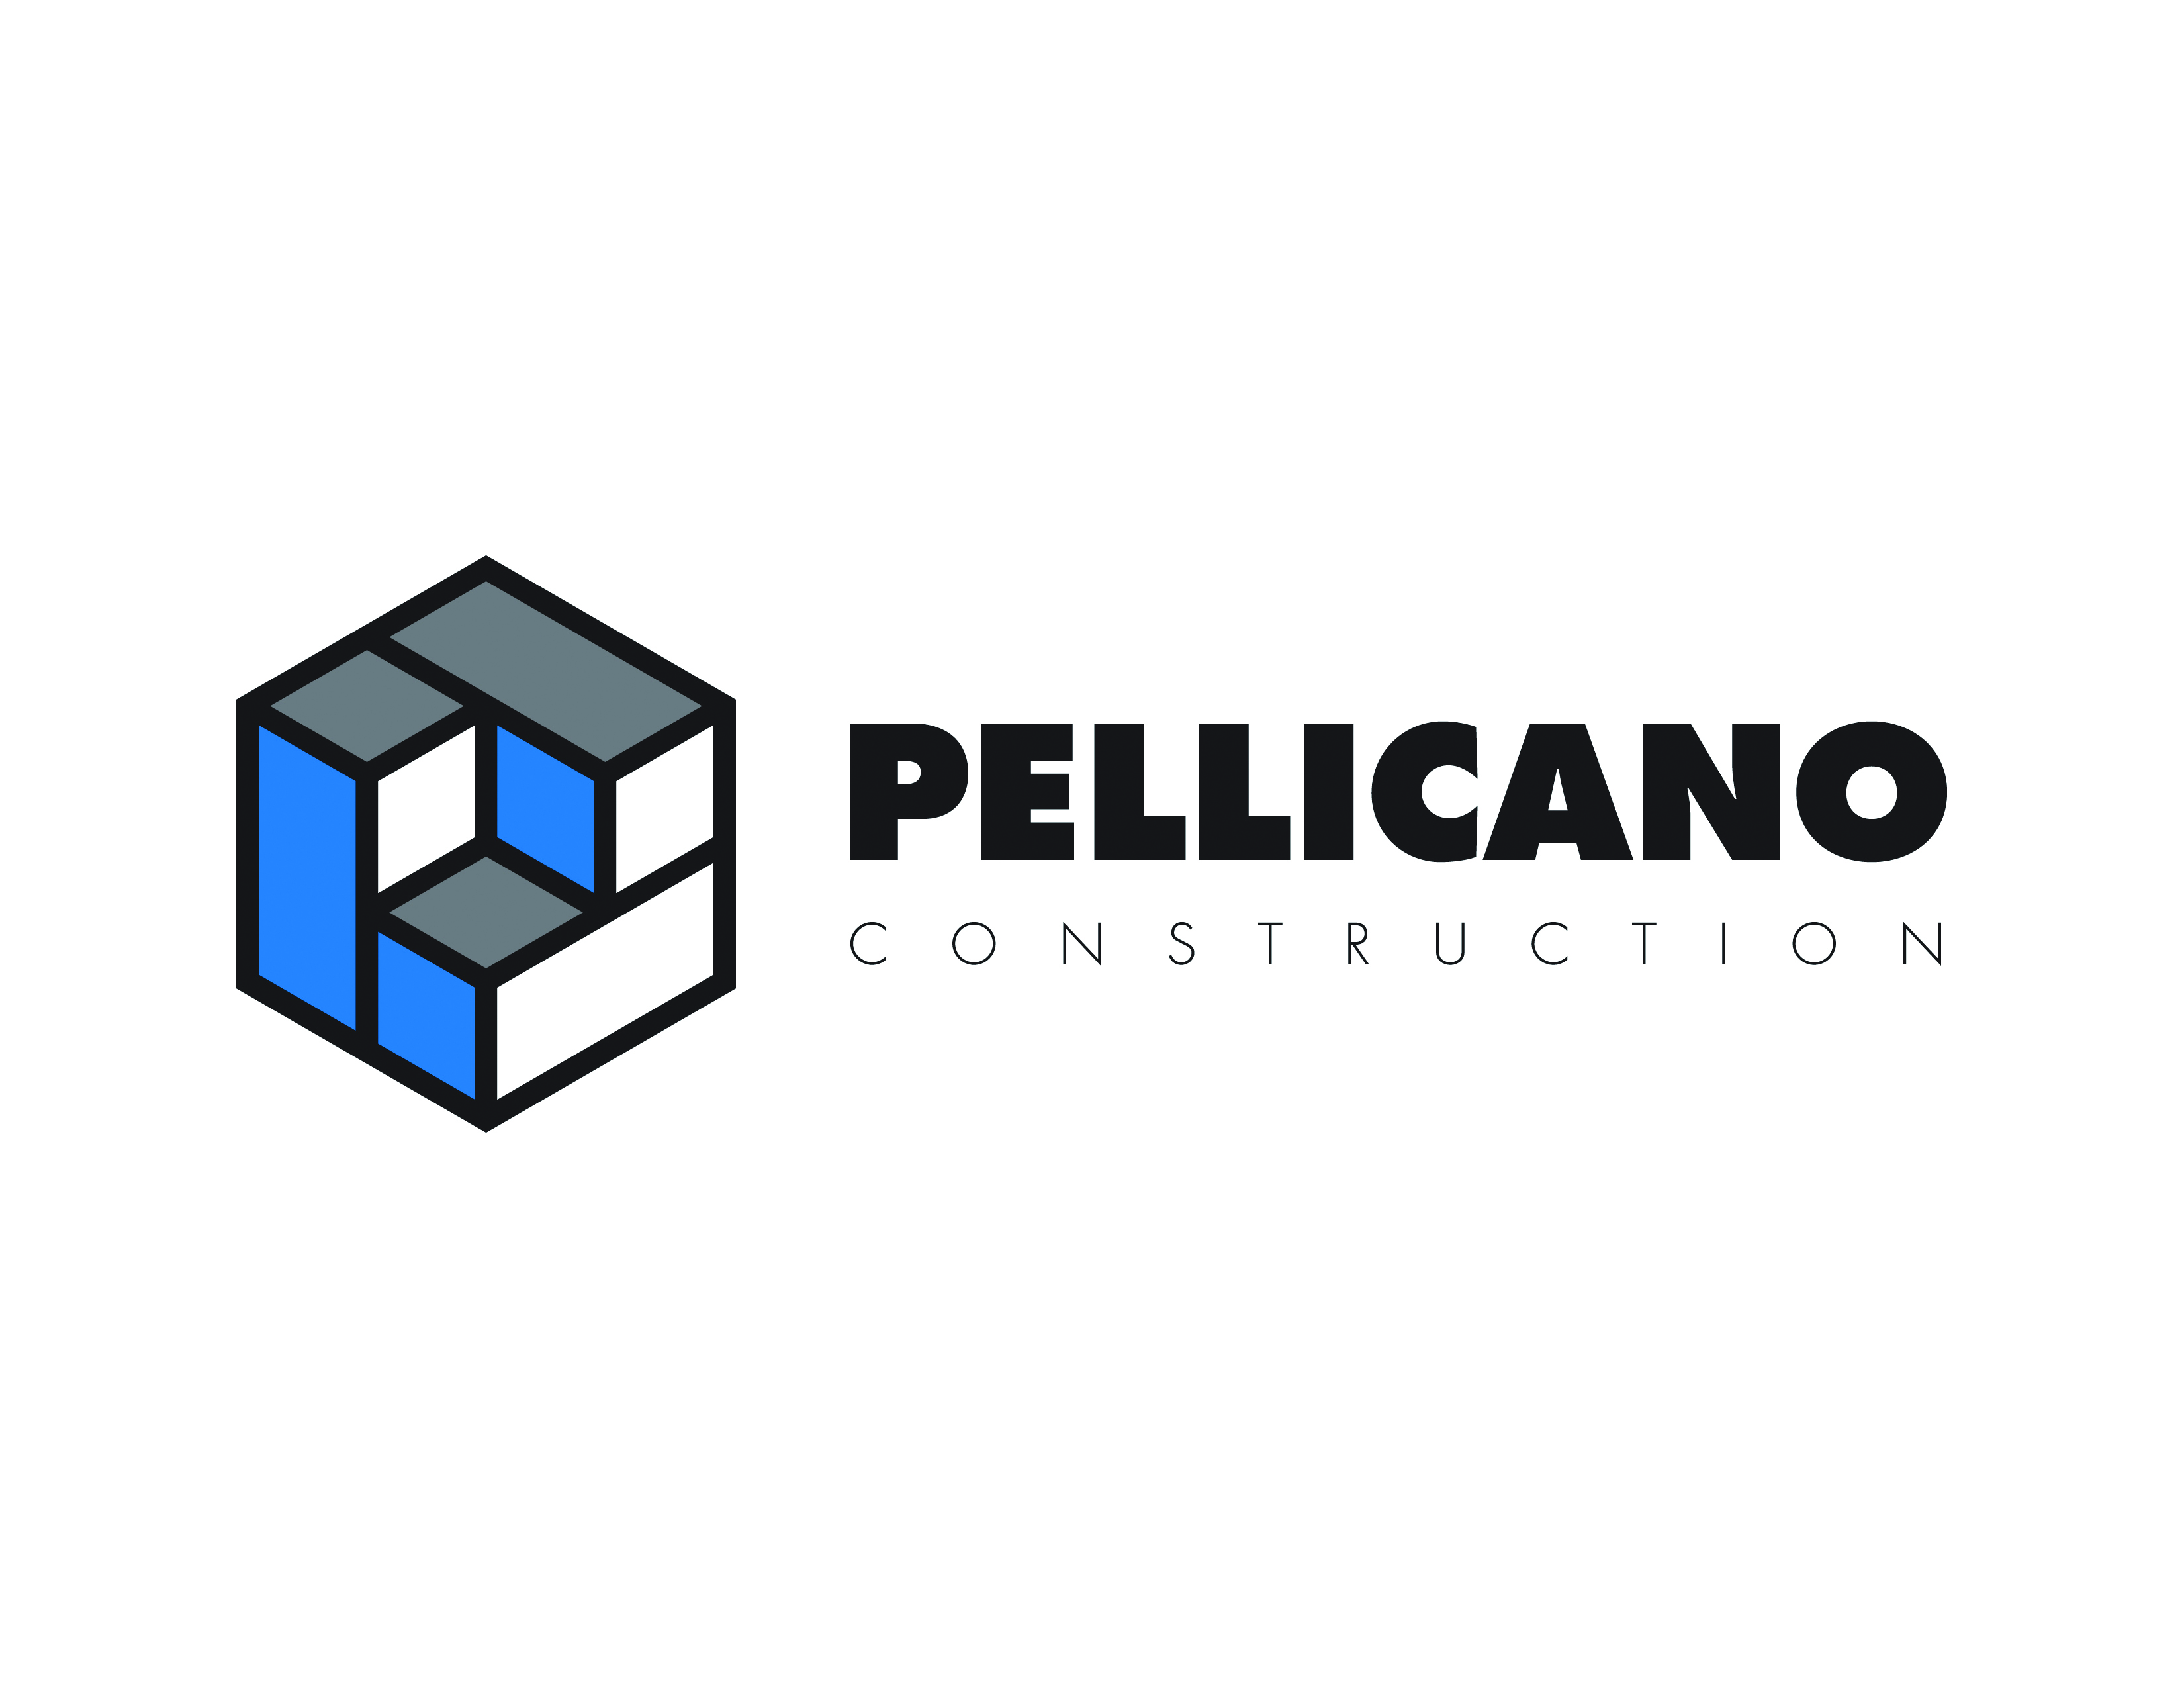 Pellicano Construction